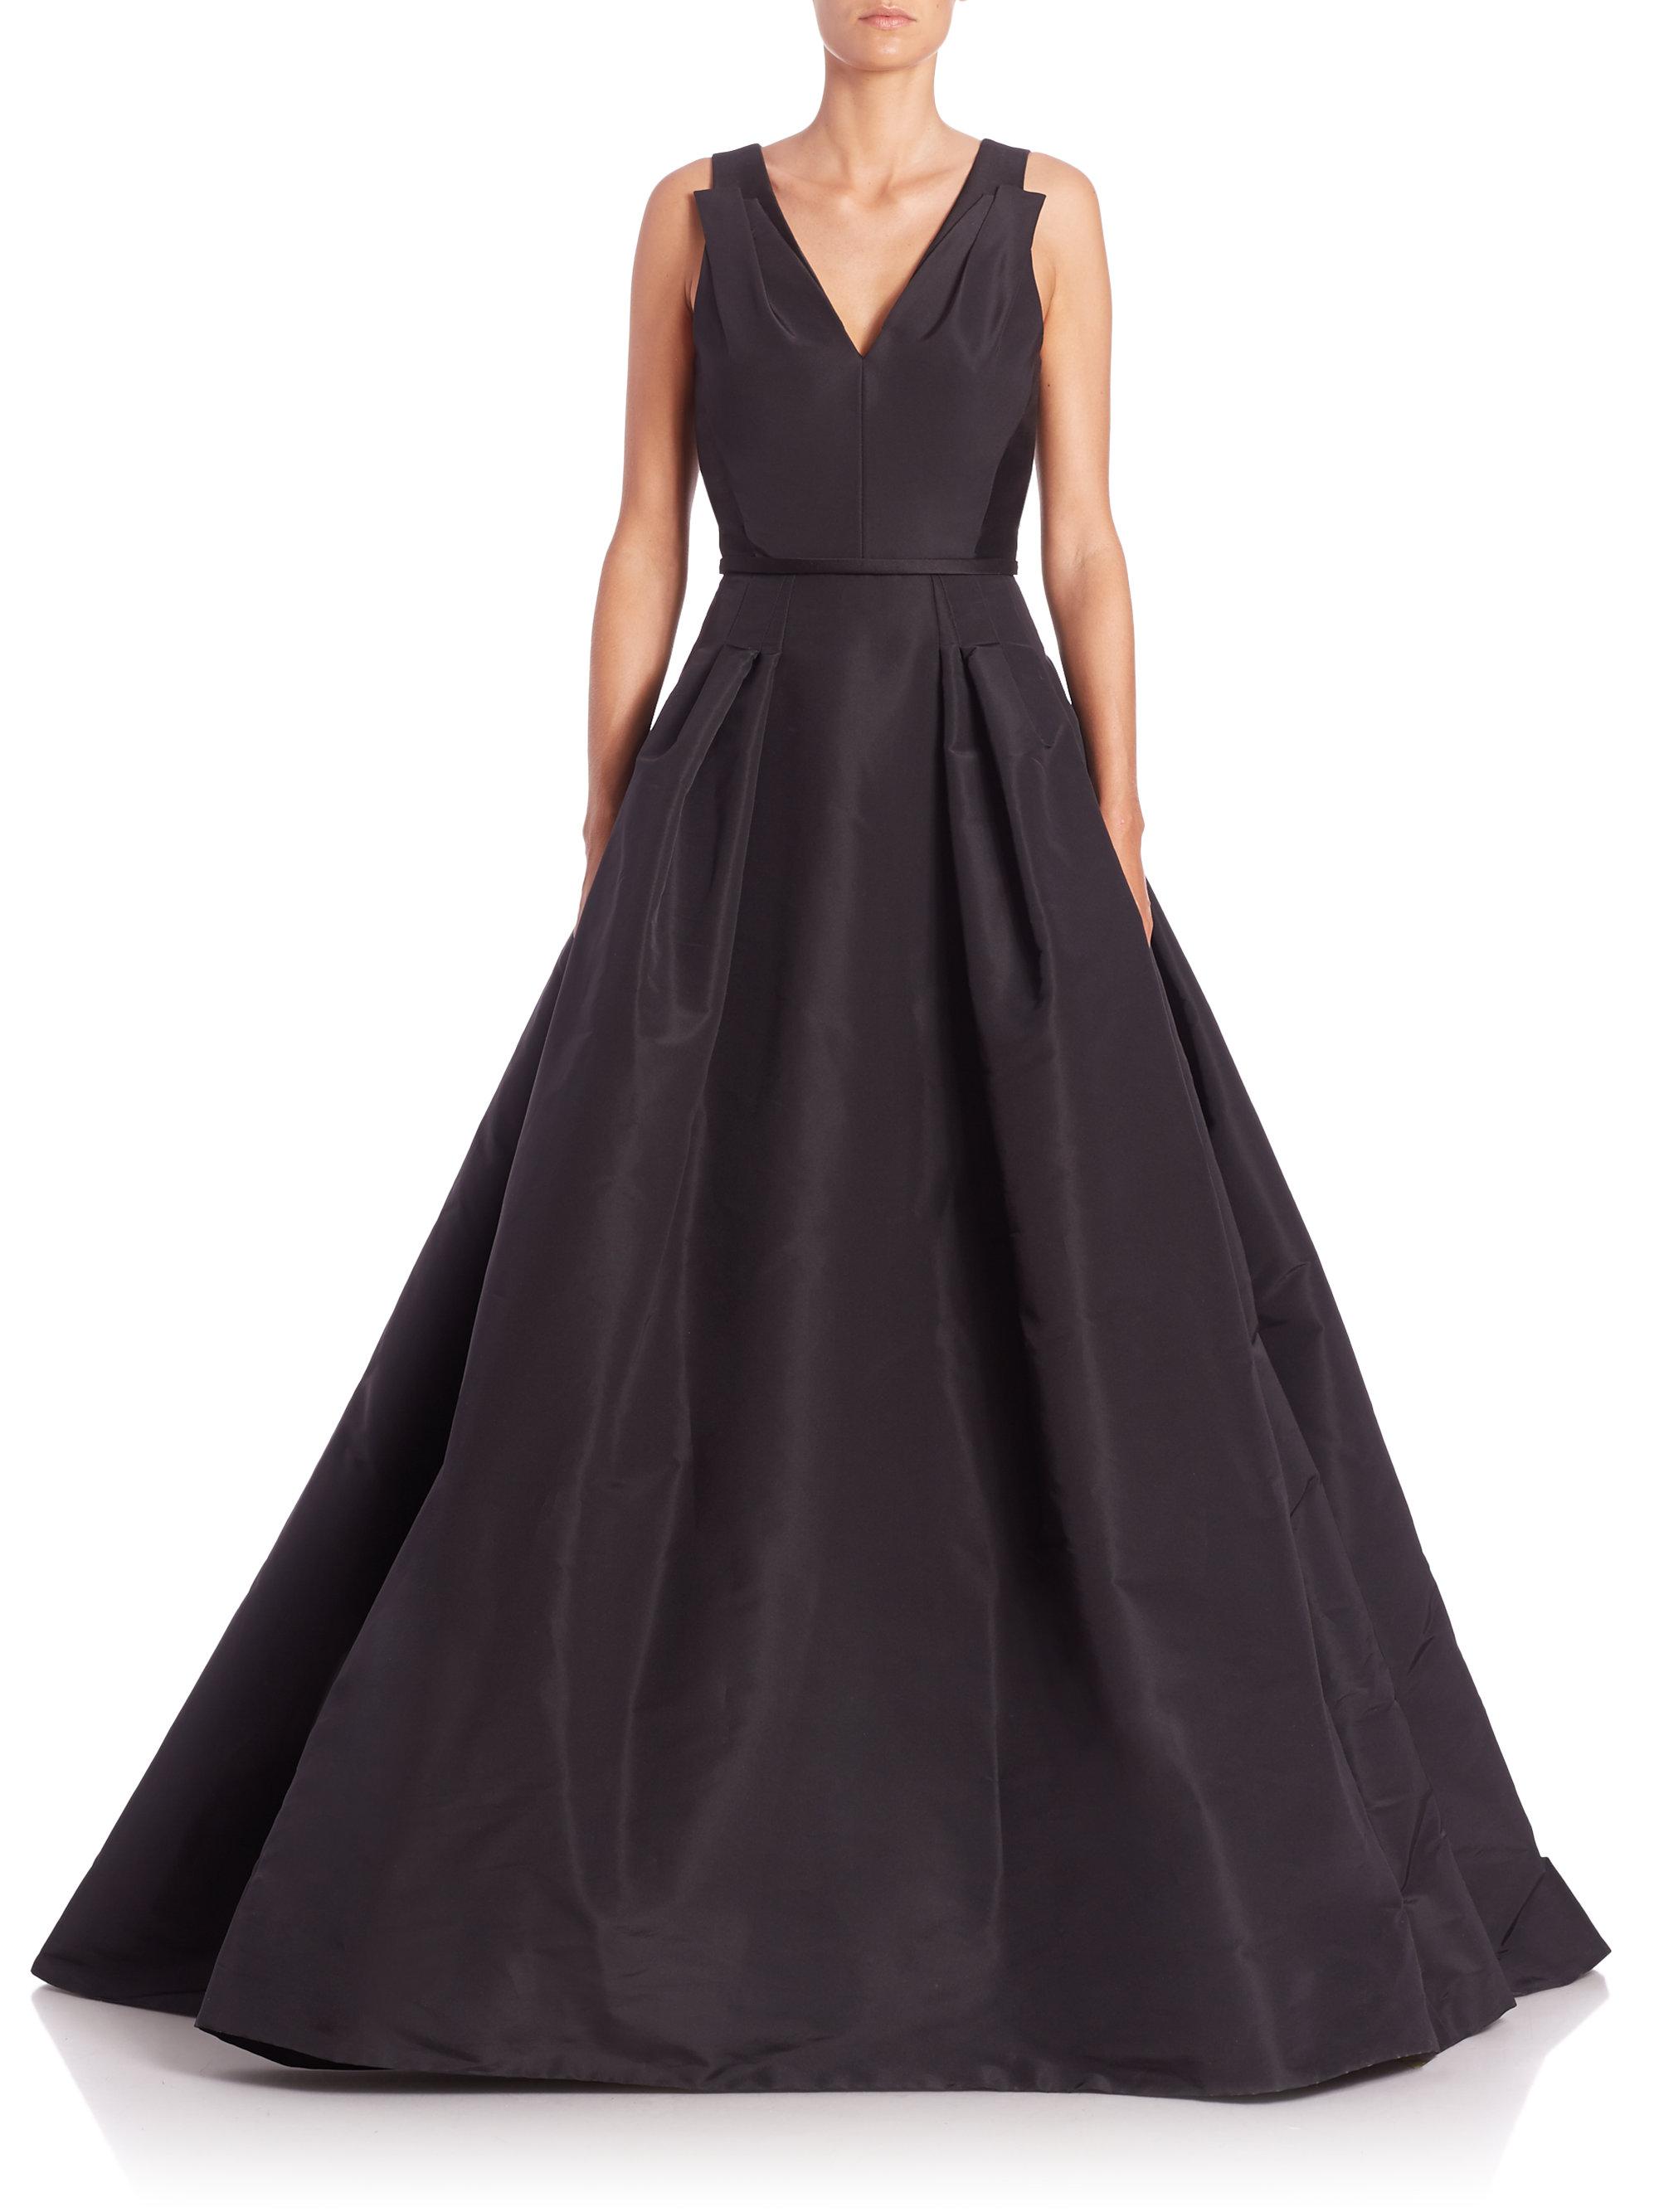 Lyst - Carolina Herrera Icon Collection Flared Silk Gown in Black